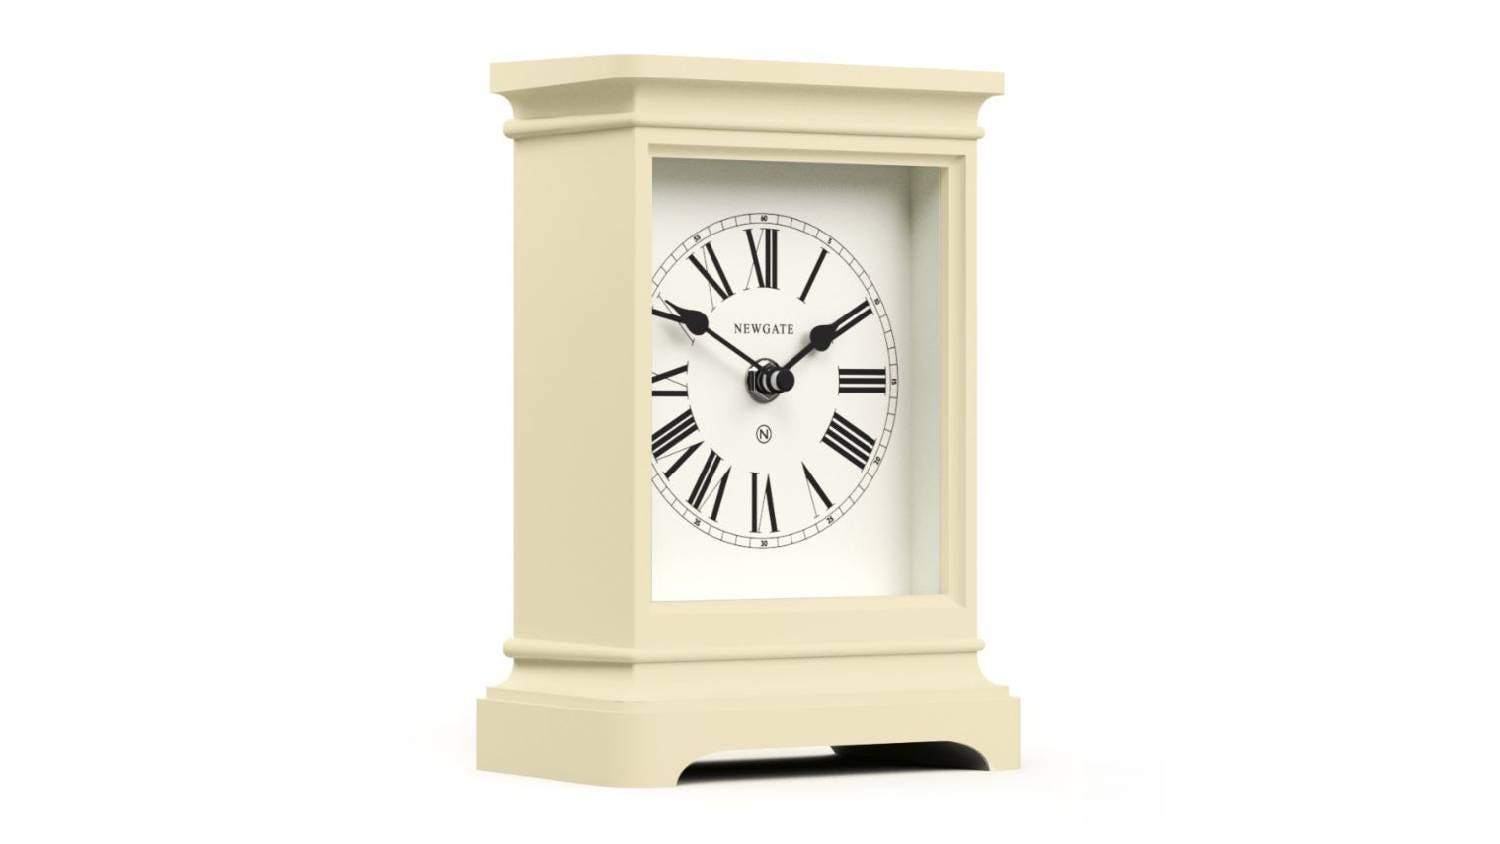 Newgate "Time Lord" Mantel Clock - Matte Linen White